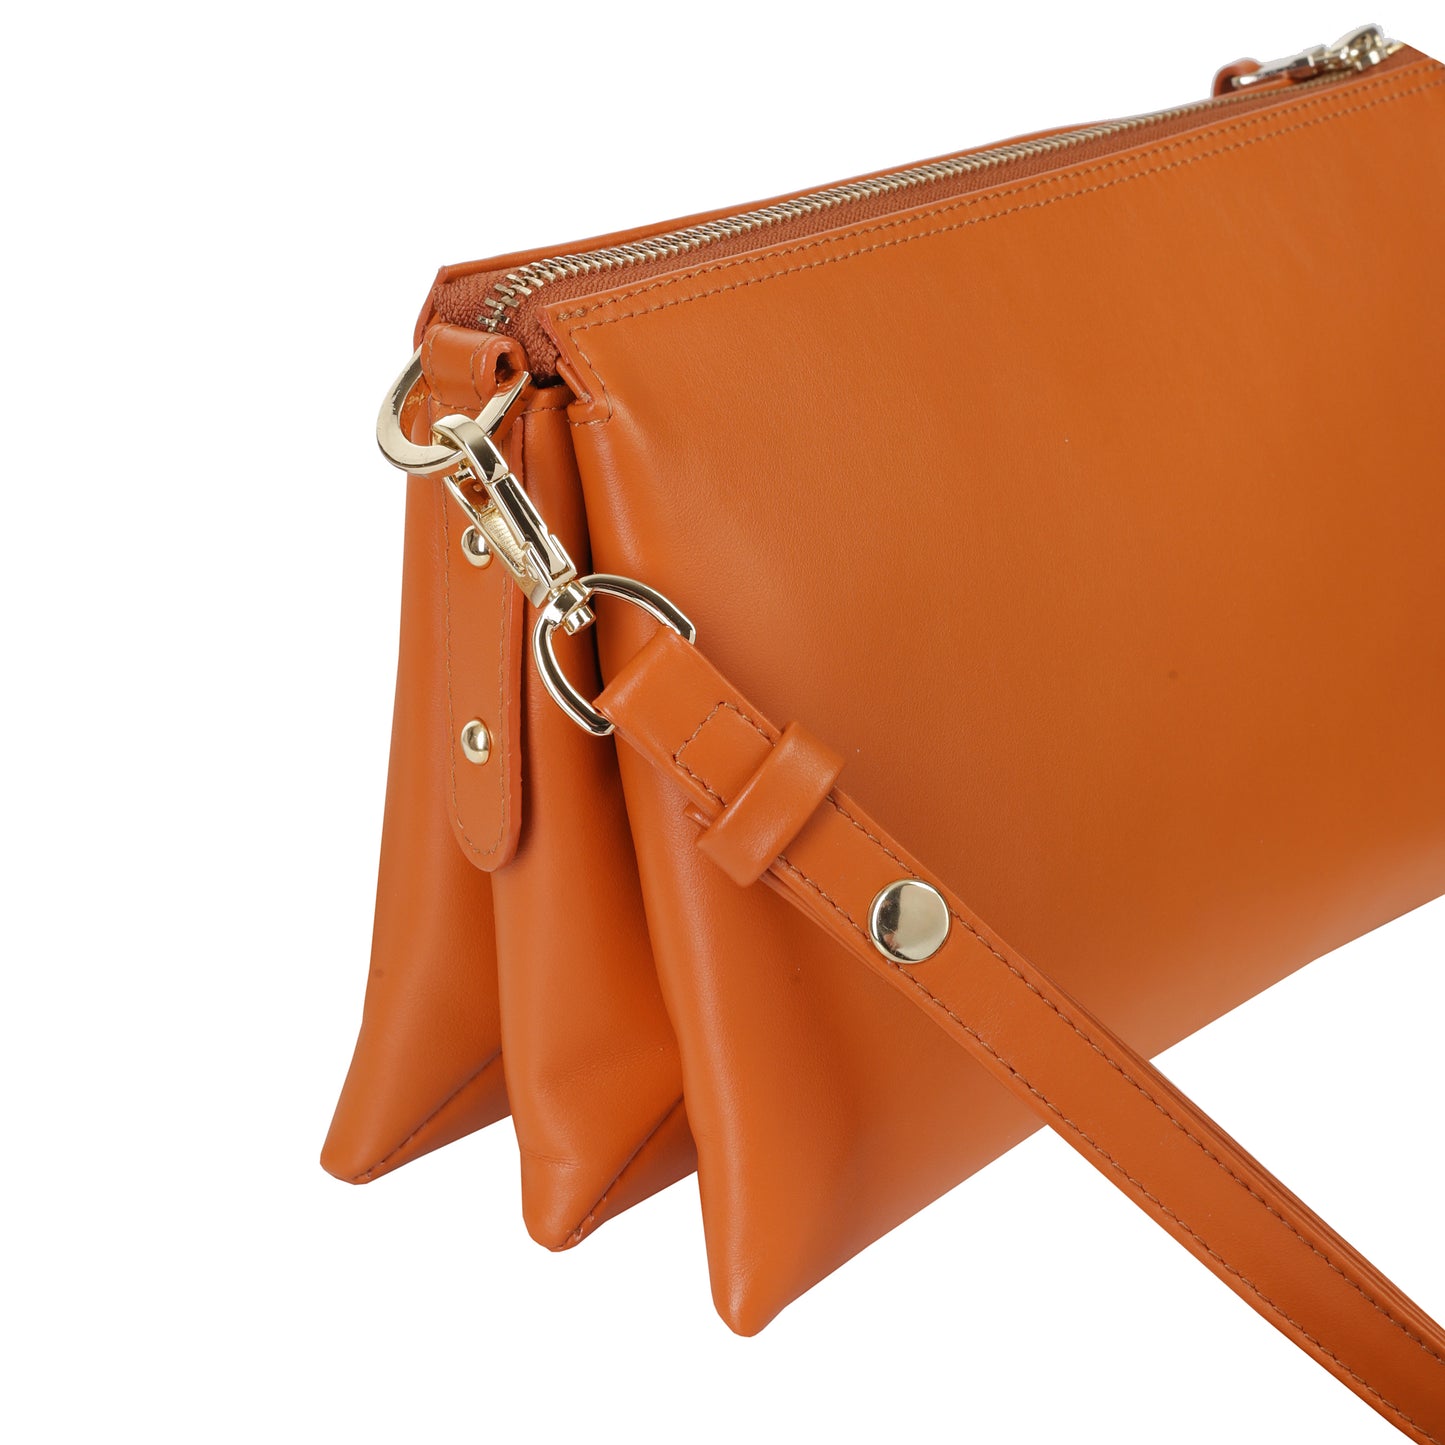 ELISE NAPA GINGER women's leather handbag